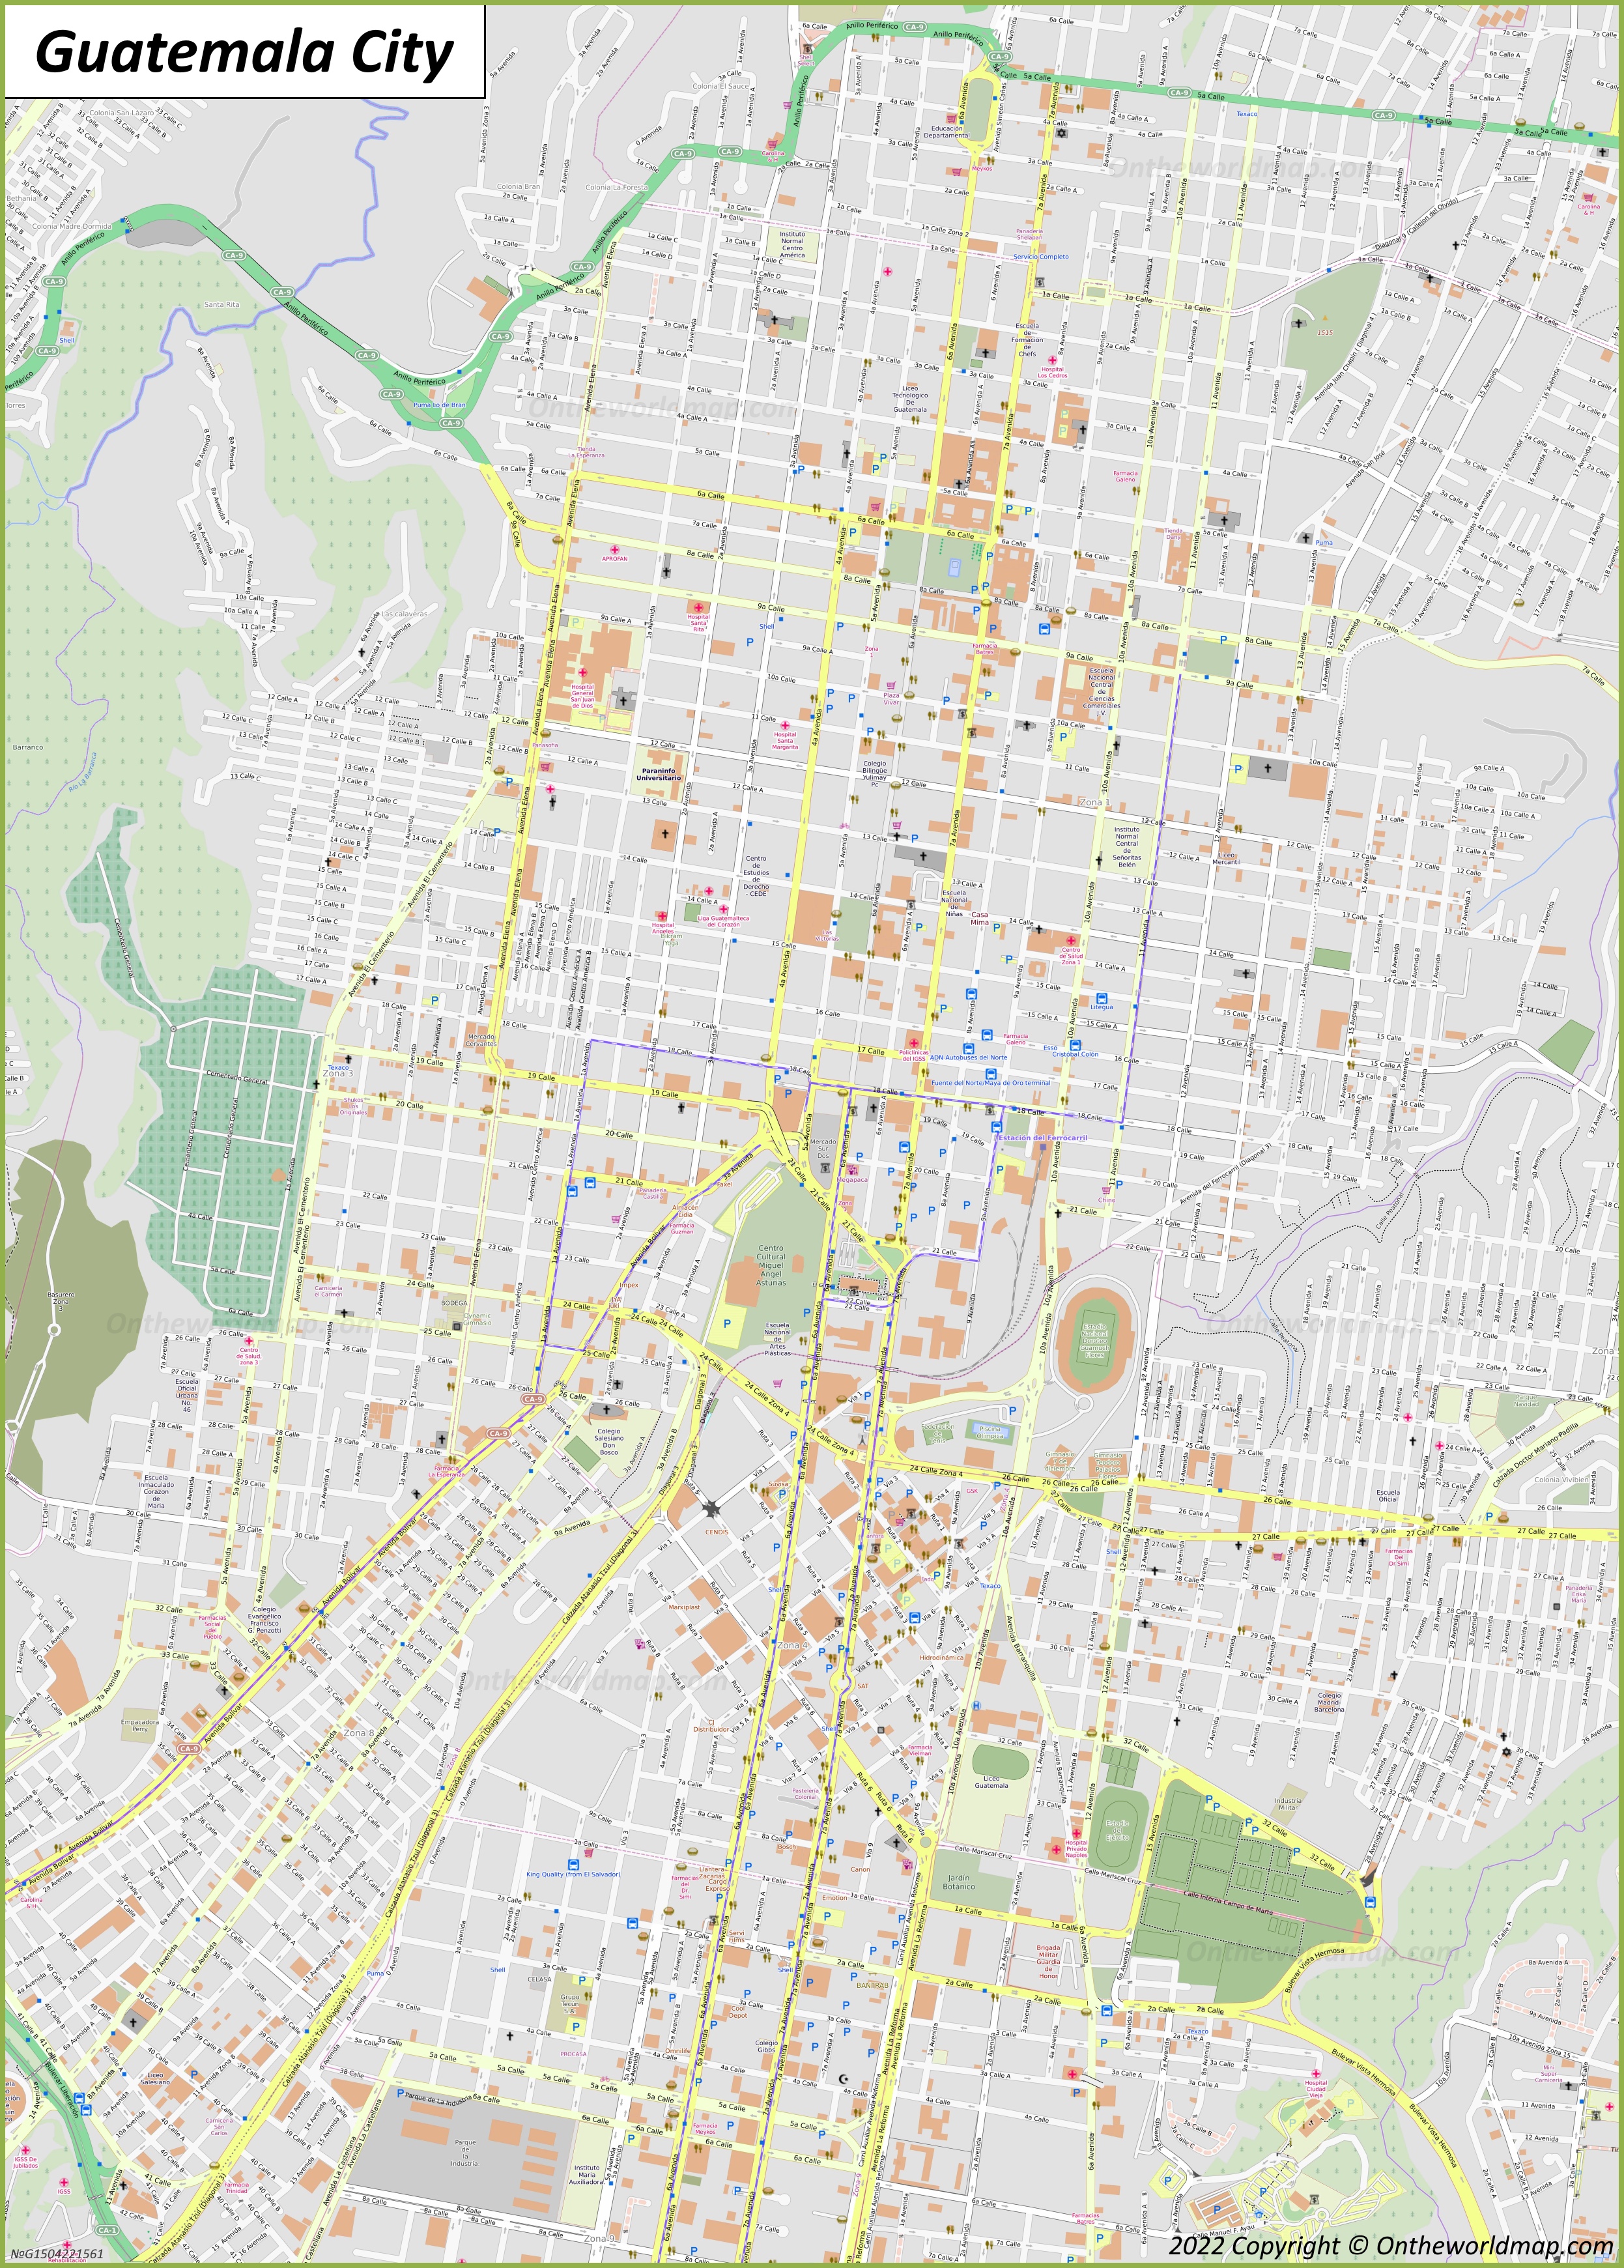 Guatemala City Centre Map